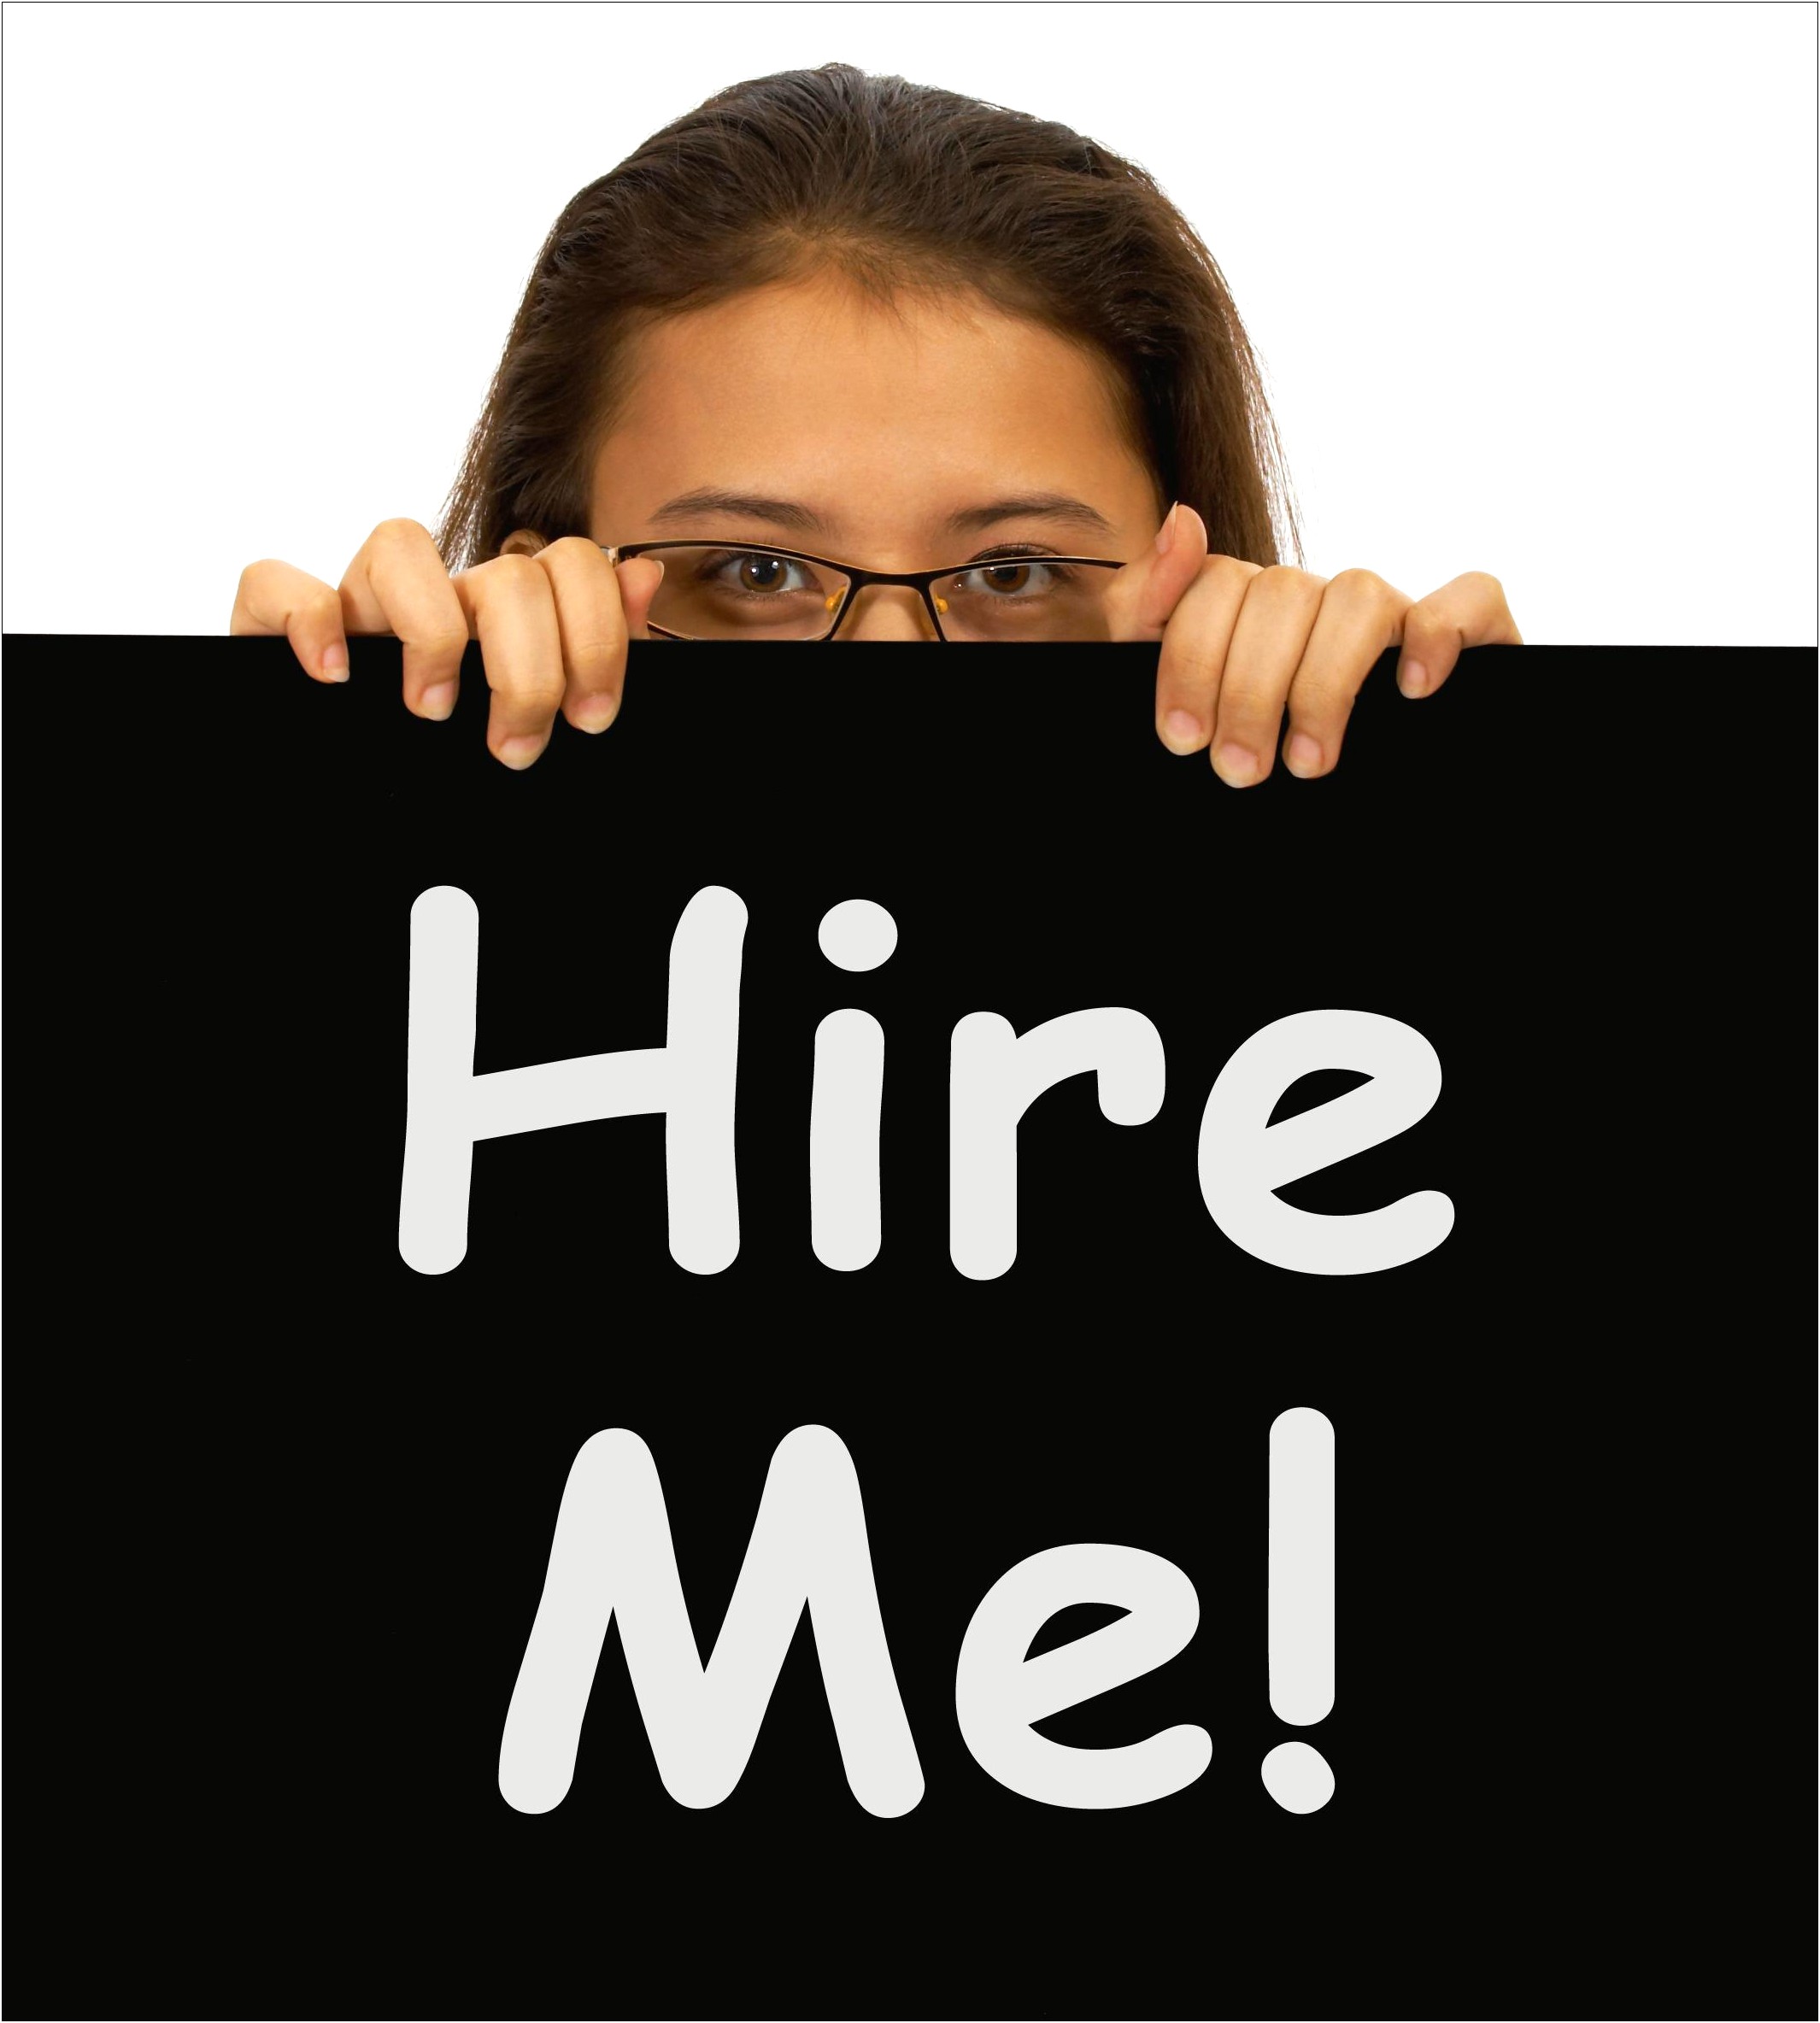 Long Term Unemployed Sample Resume